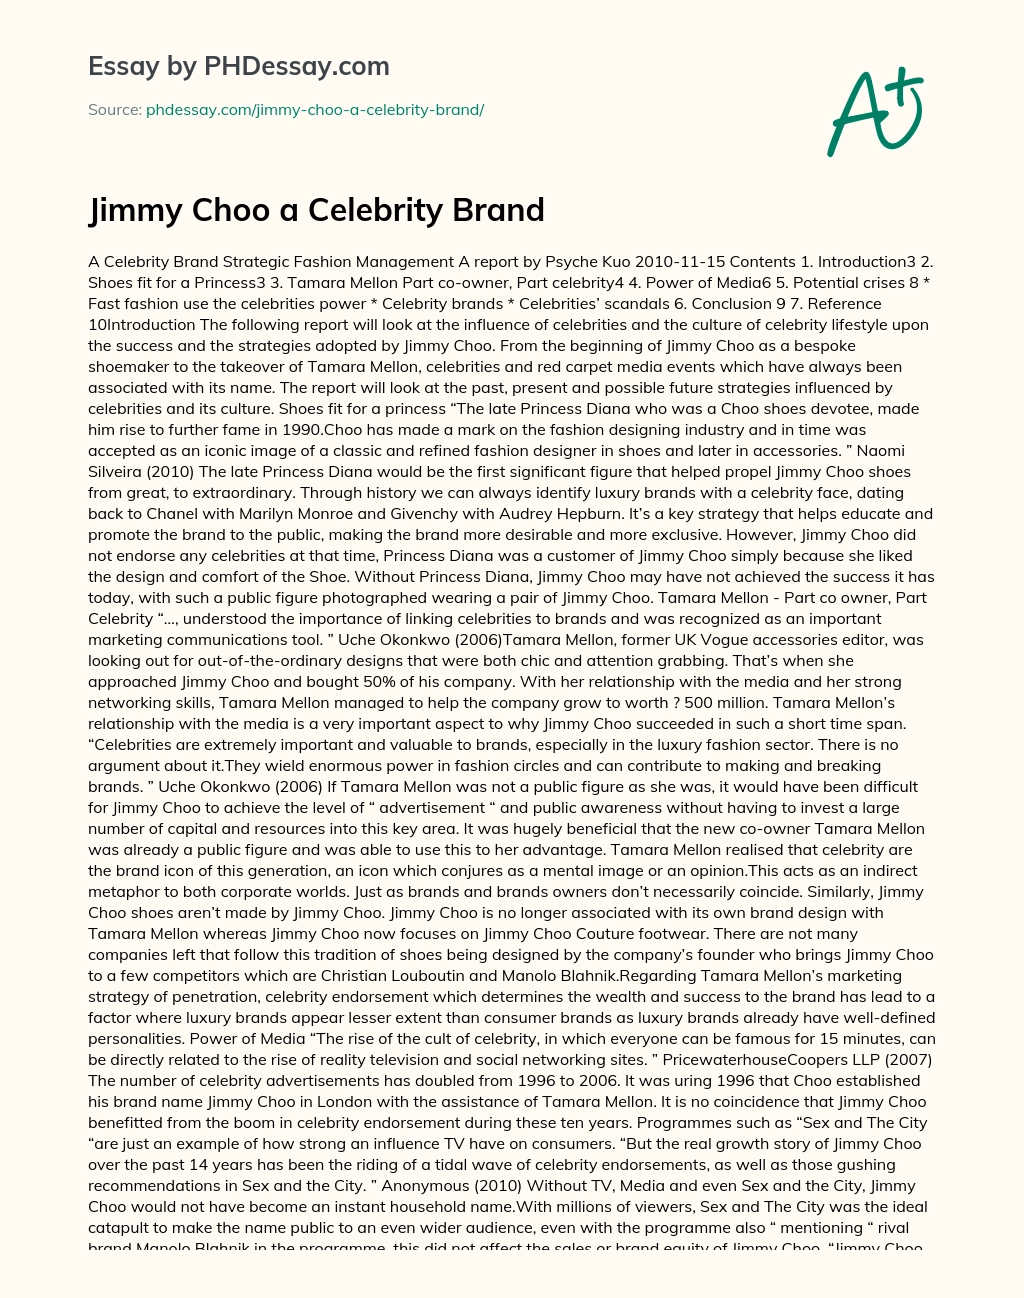 Jimmy Choo a Celebrity Brand essay